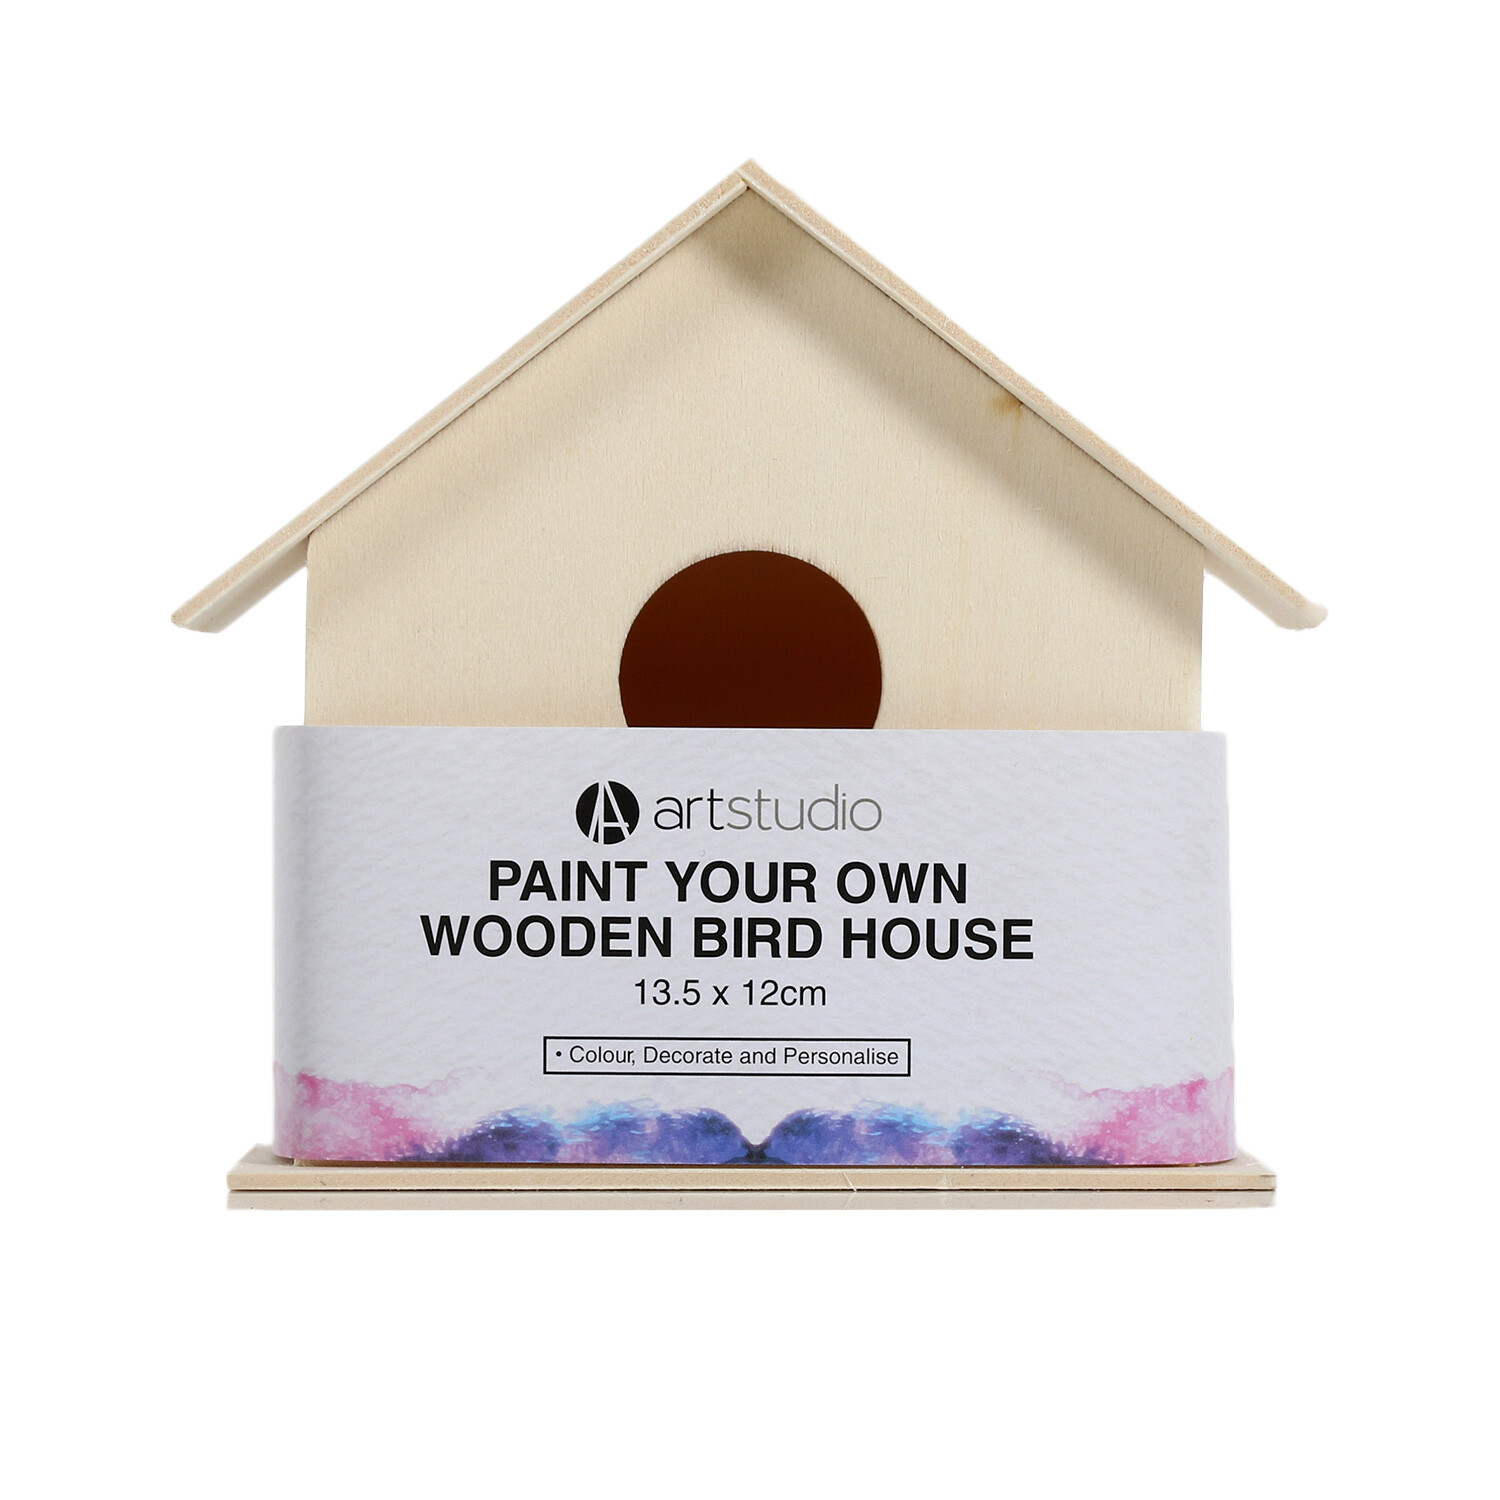 Art Studio Paint Your Own Wooden Bird House Kit Image 2